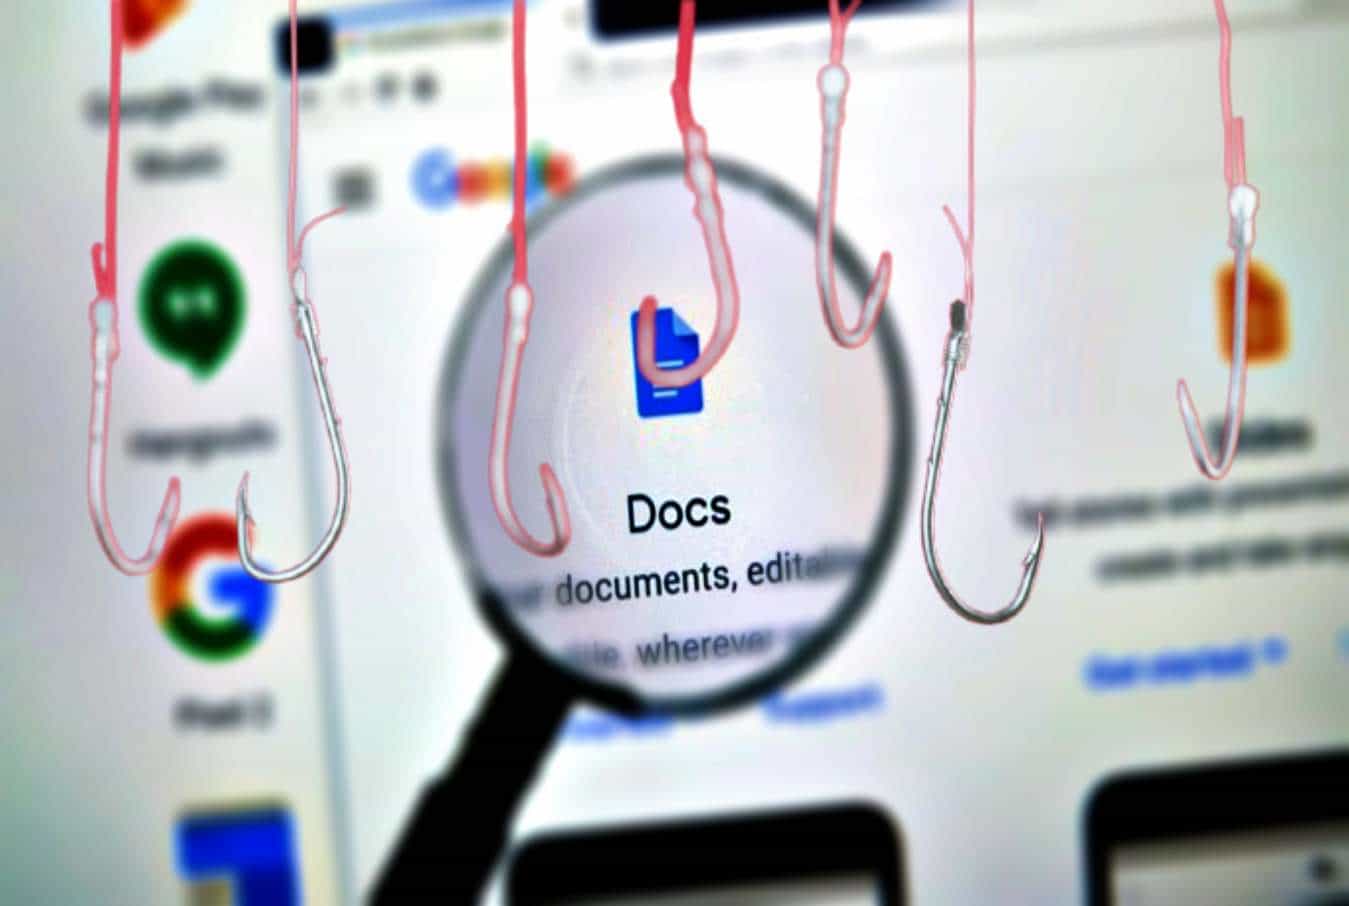 Threat actors using Google Docs exploit to spread phishing links